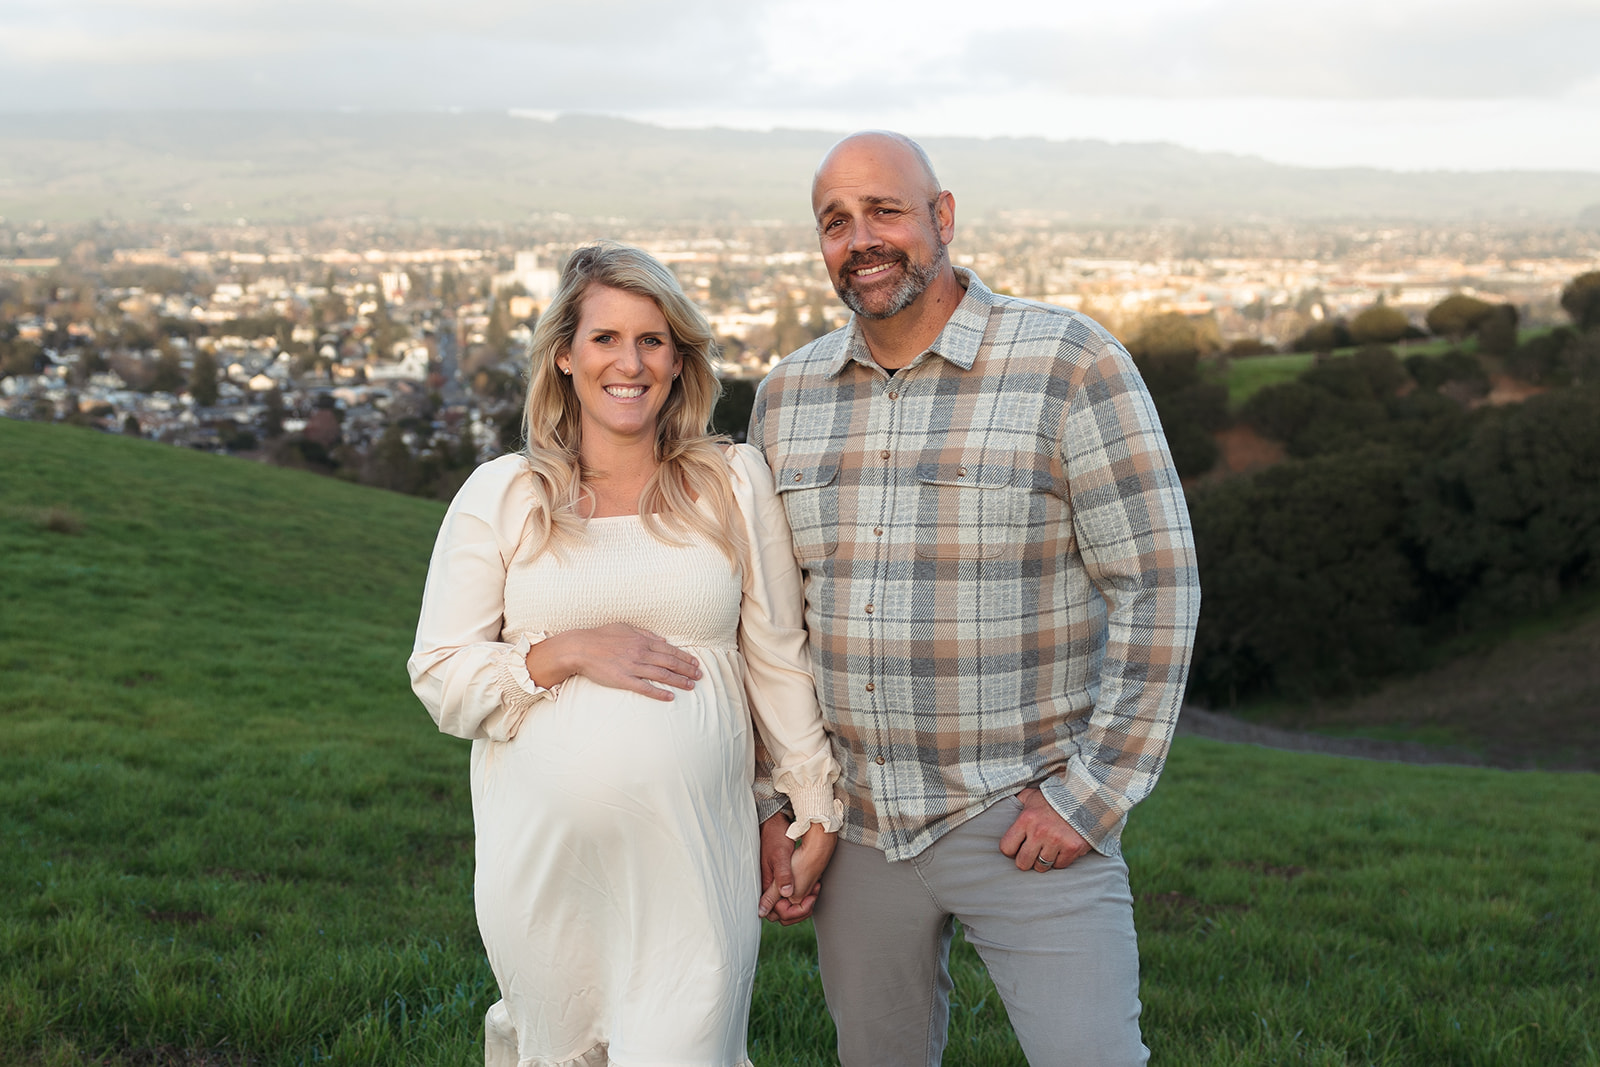 Maternity photoshoot during golden hour in the Petaluma hills